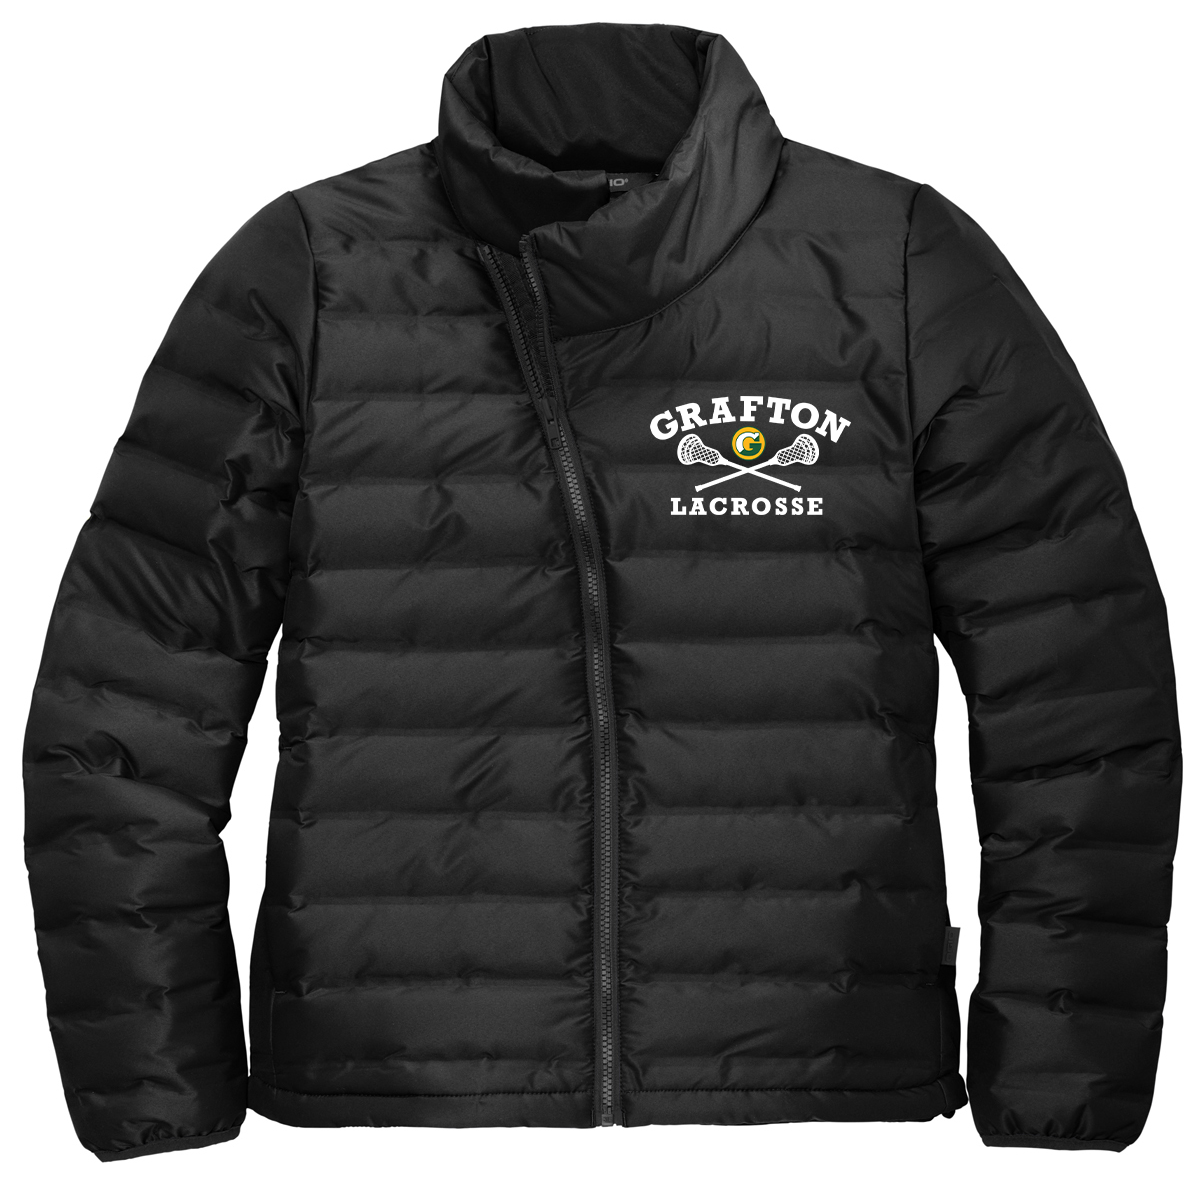 Grafton Lacrosse OGIO Ladies Puffer Jacket